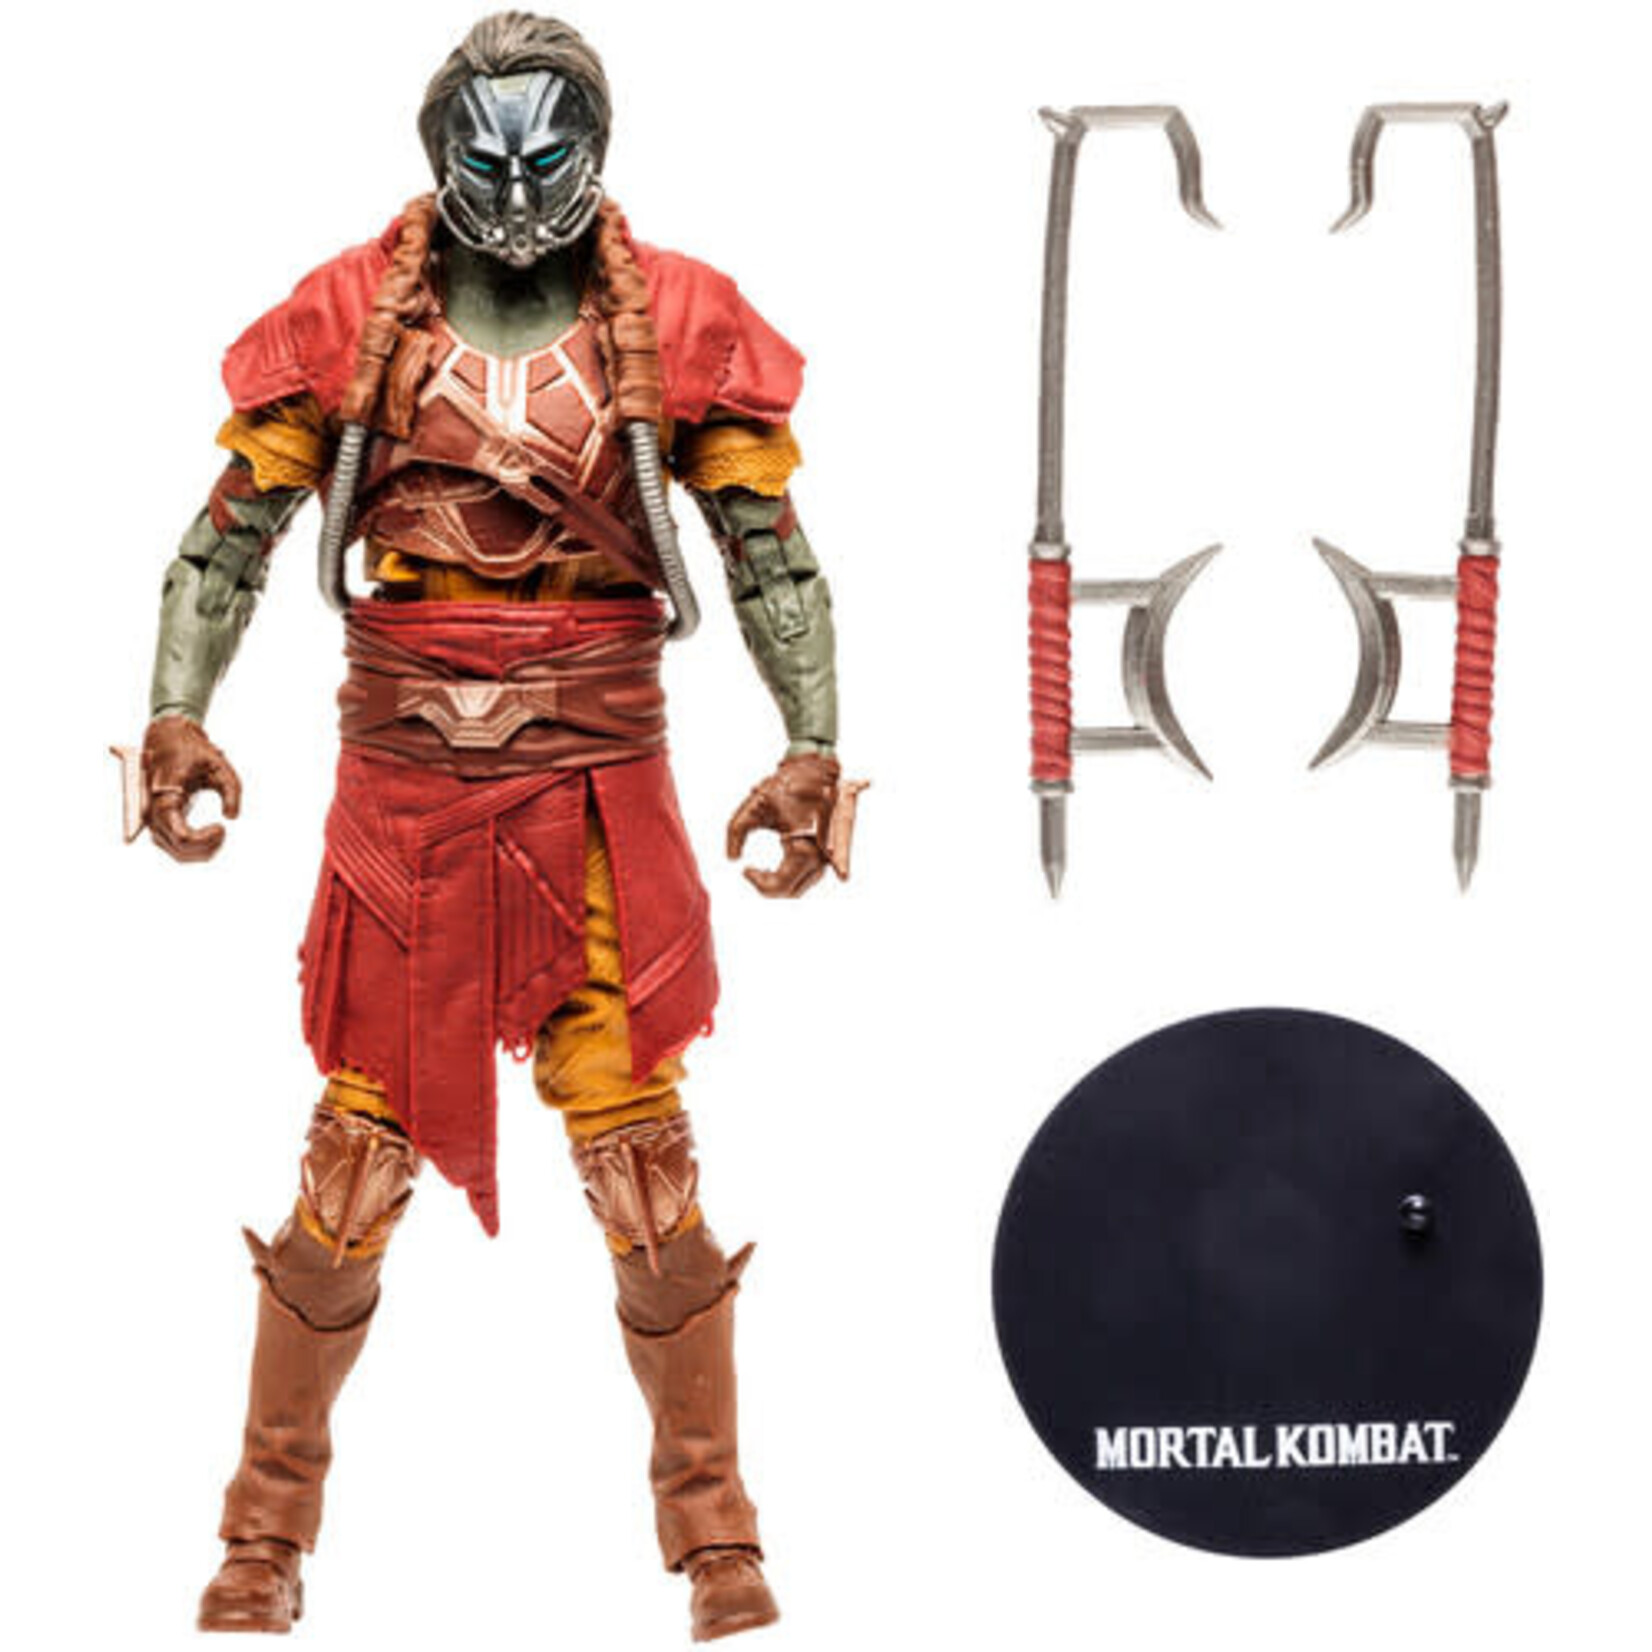 FIGURE-McFarlane Mortal Kombat 11  7" Kabal with Rapid Red Action Figure